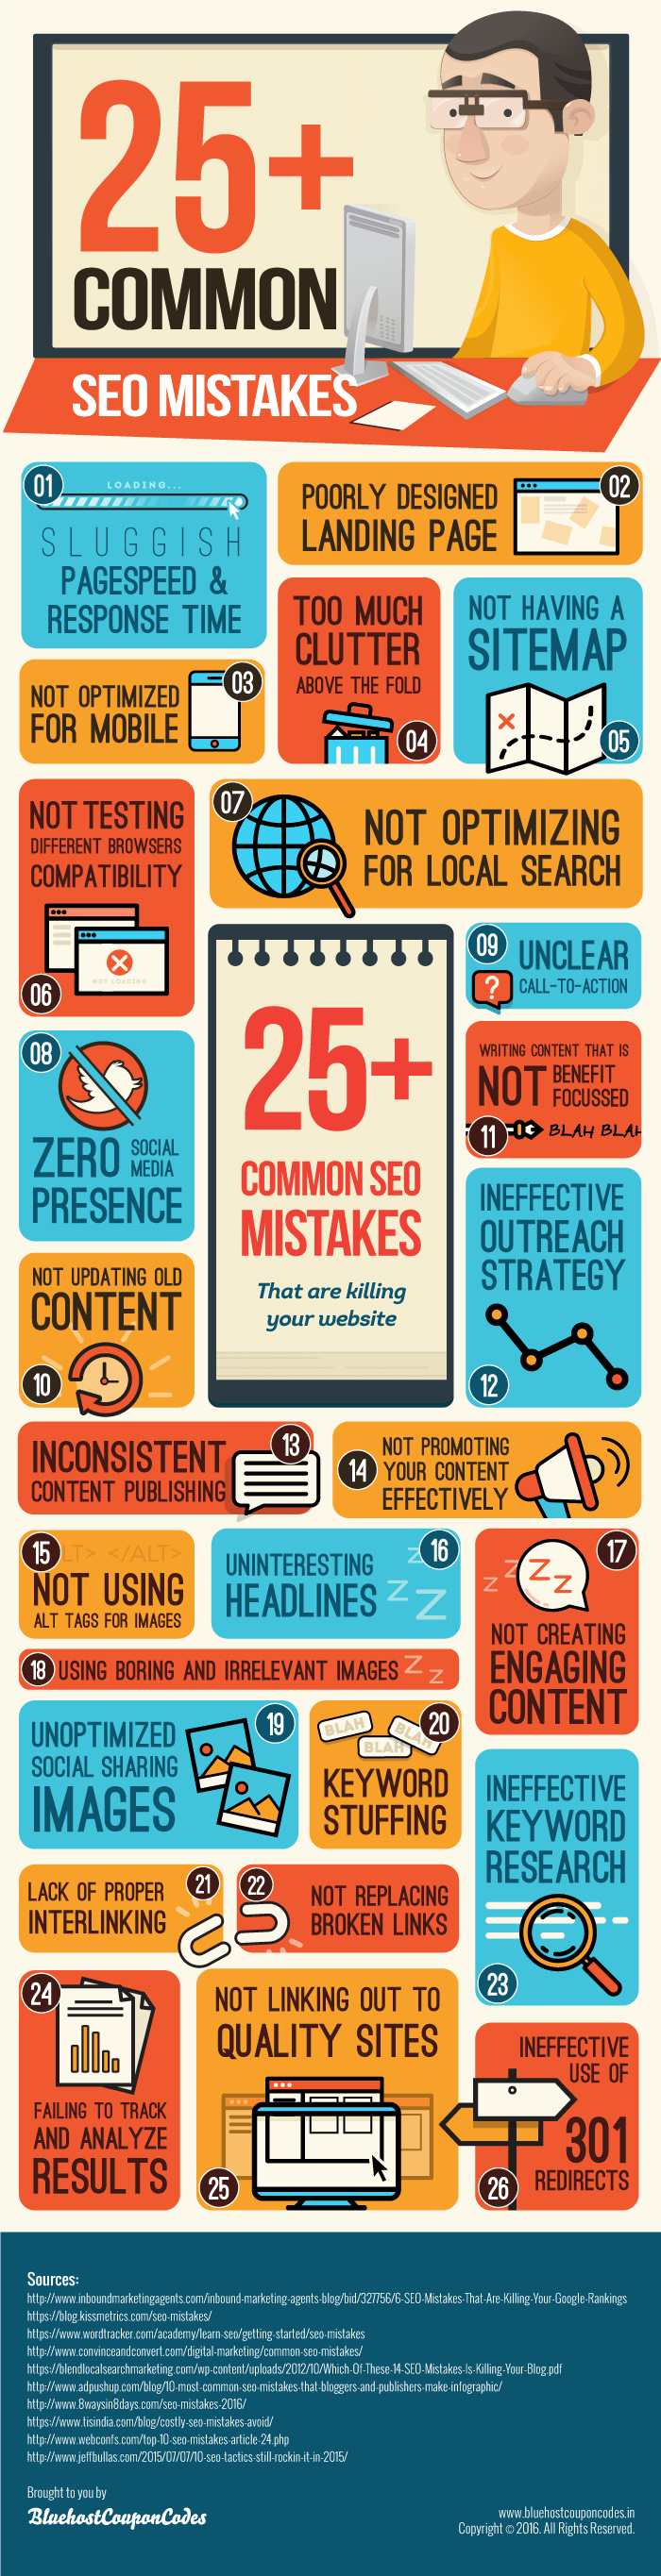 Common-SEO-Mistakes-Infographic